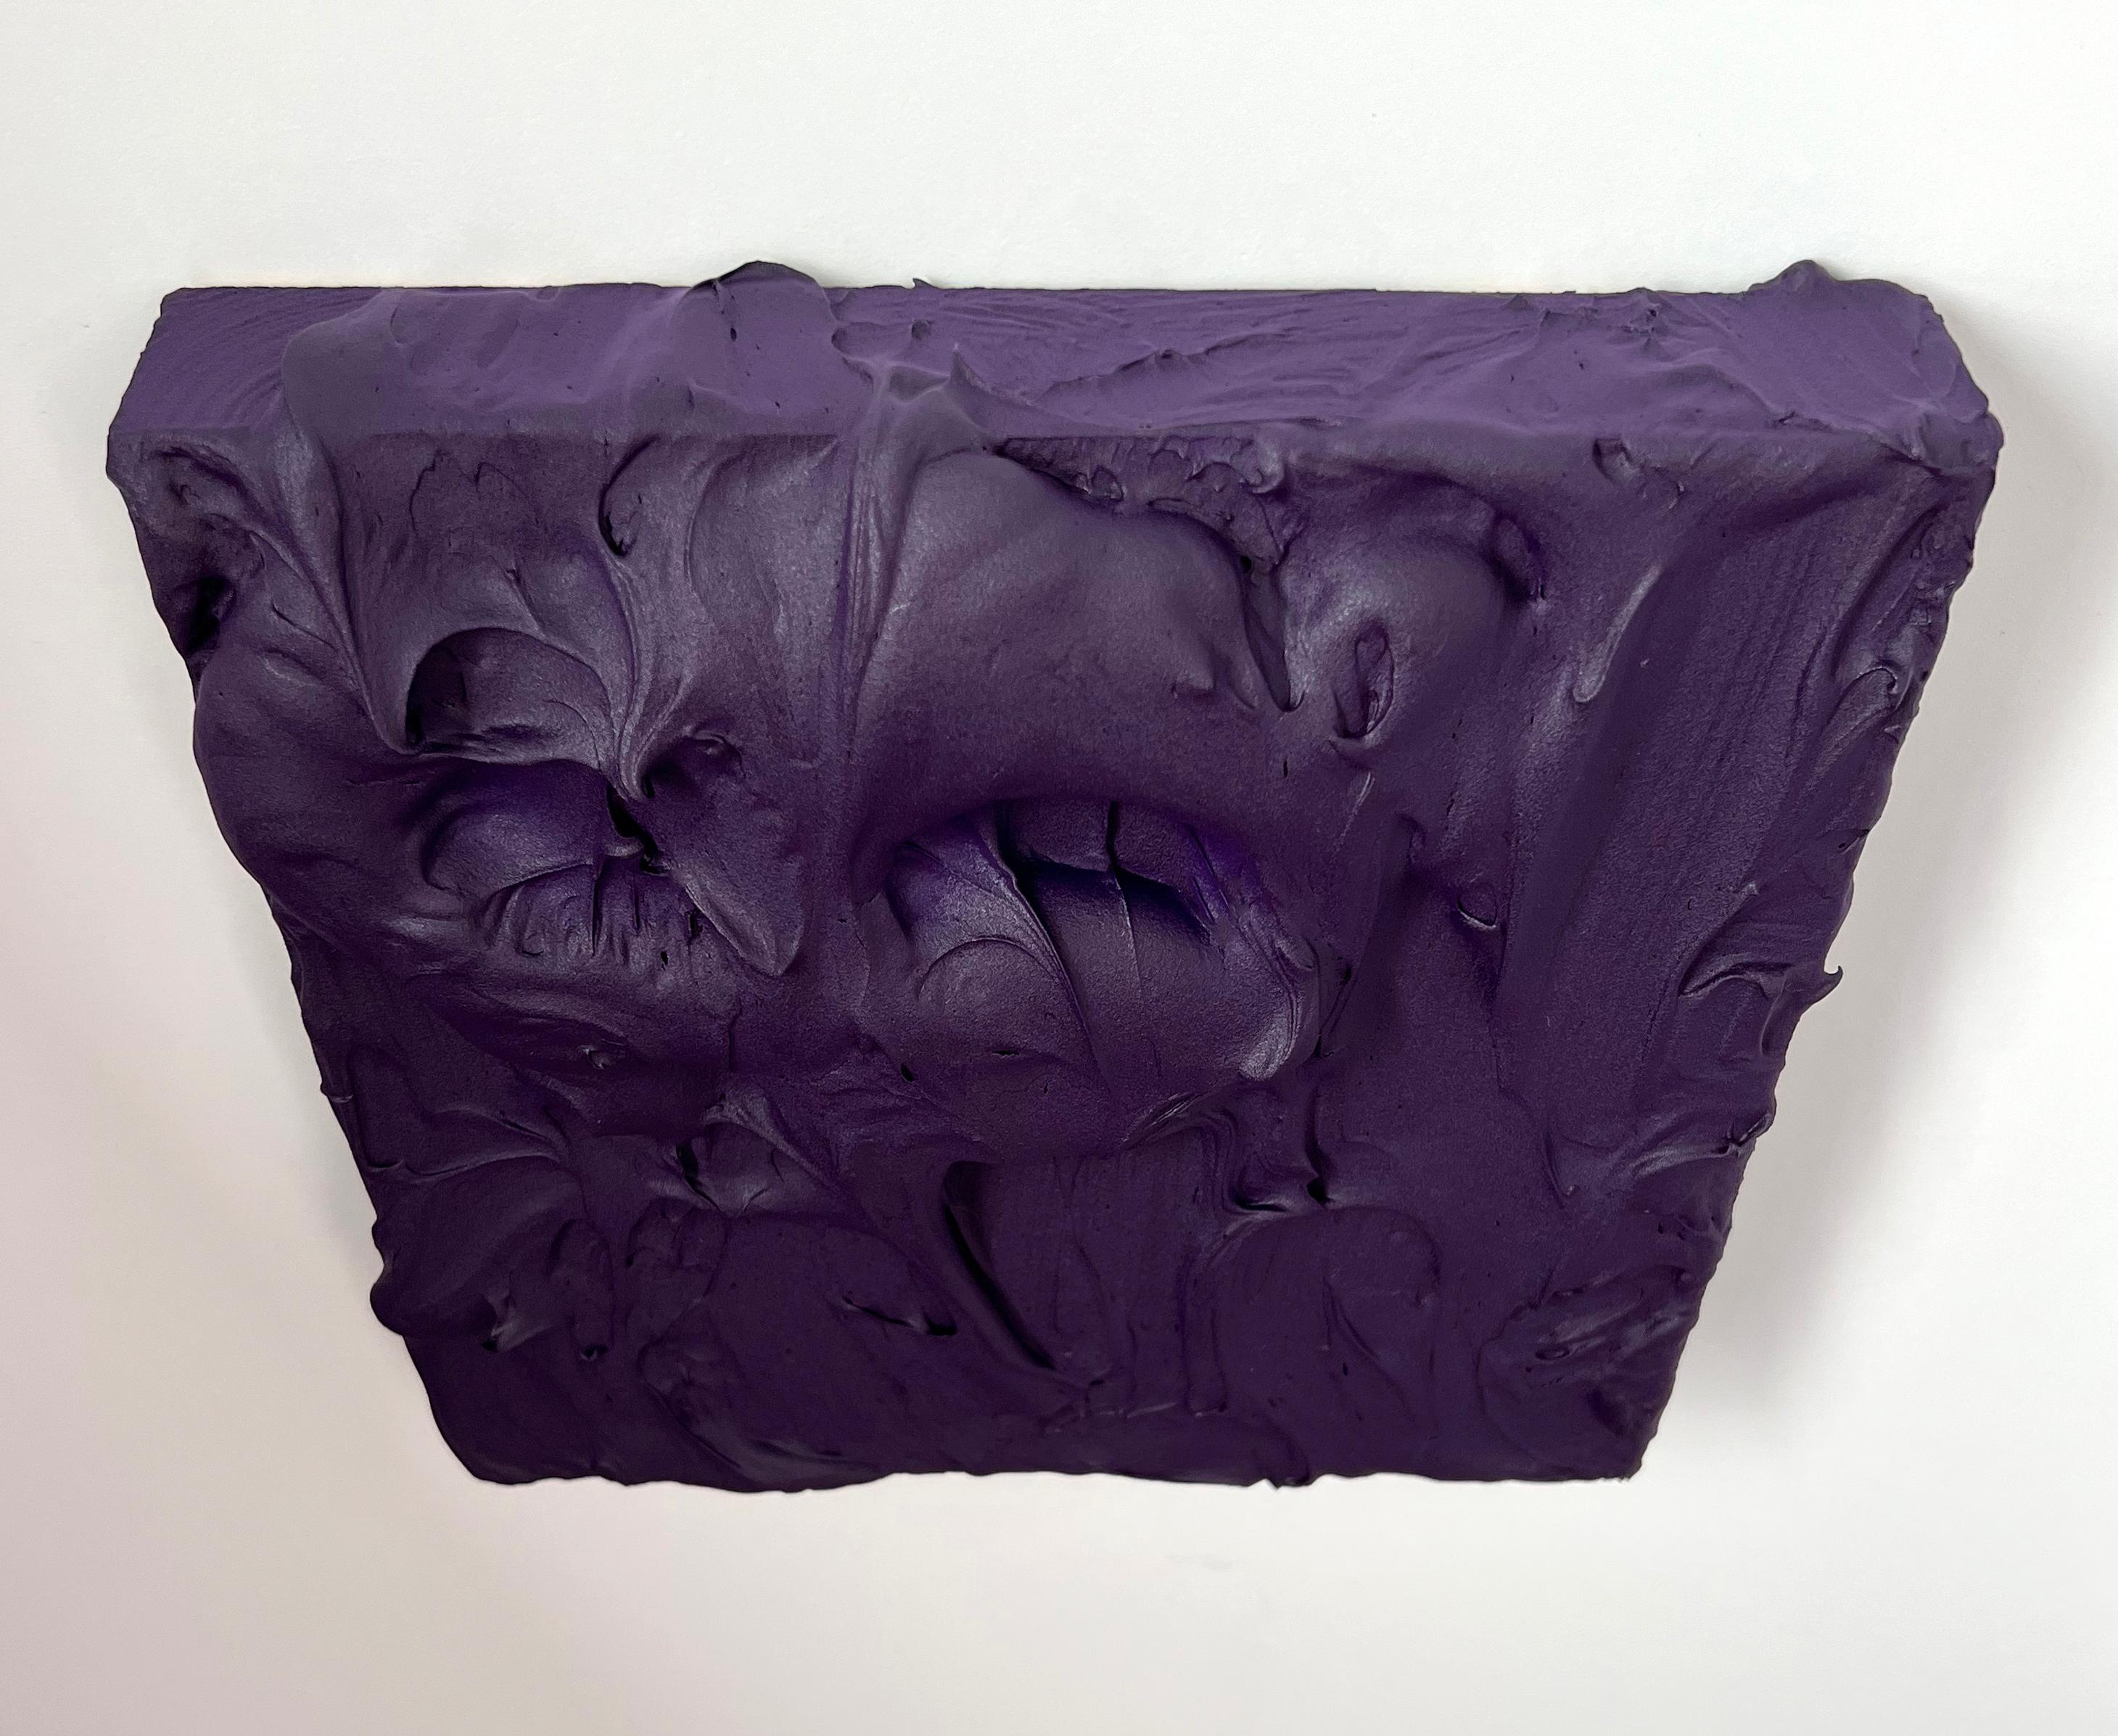 Royal Purple Excess (thick impasto painting monochrome Pop-Art quadratisches Design) – Painting von Chloe Hedden